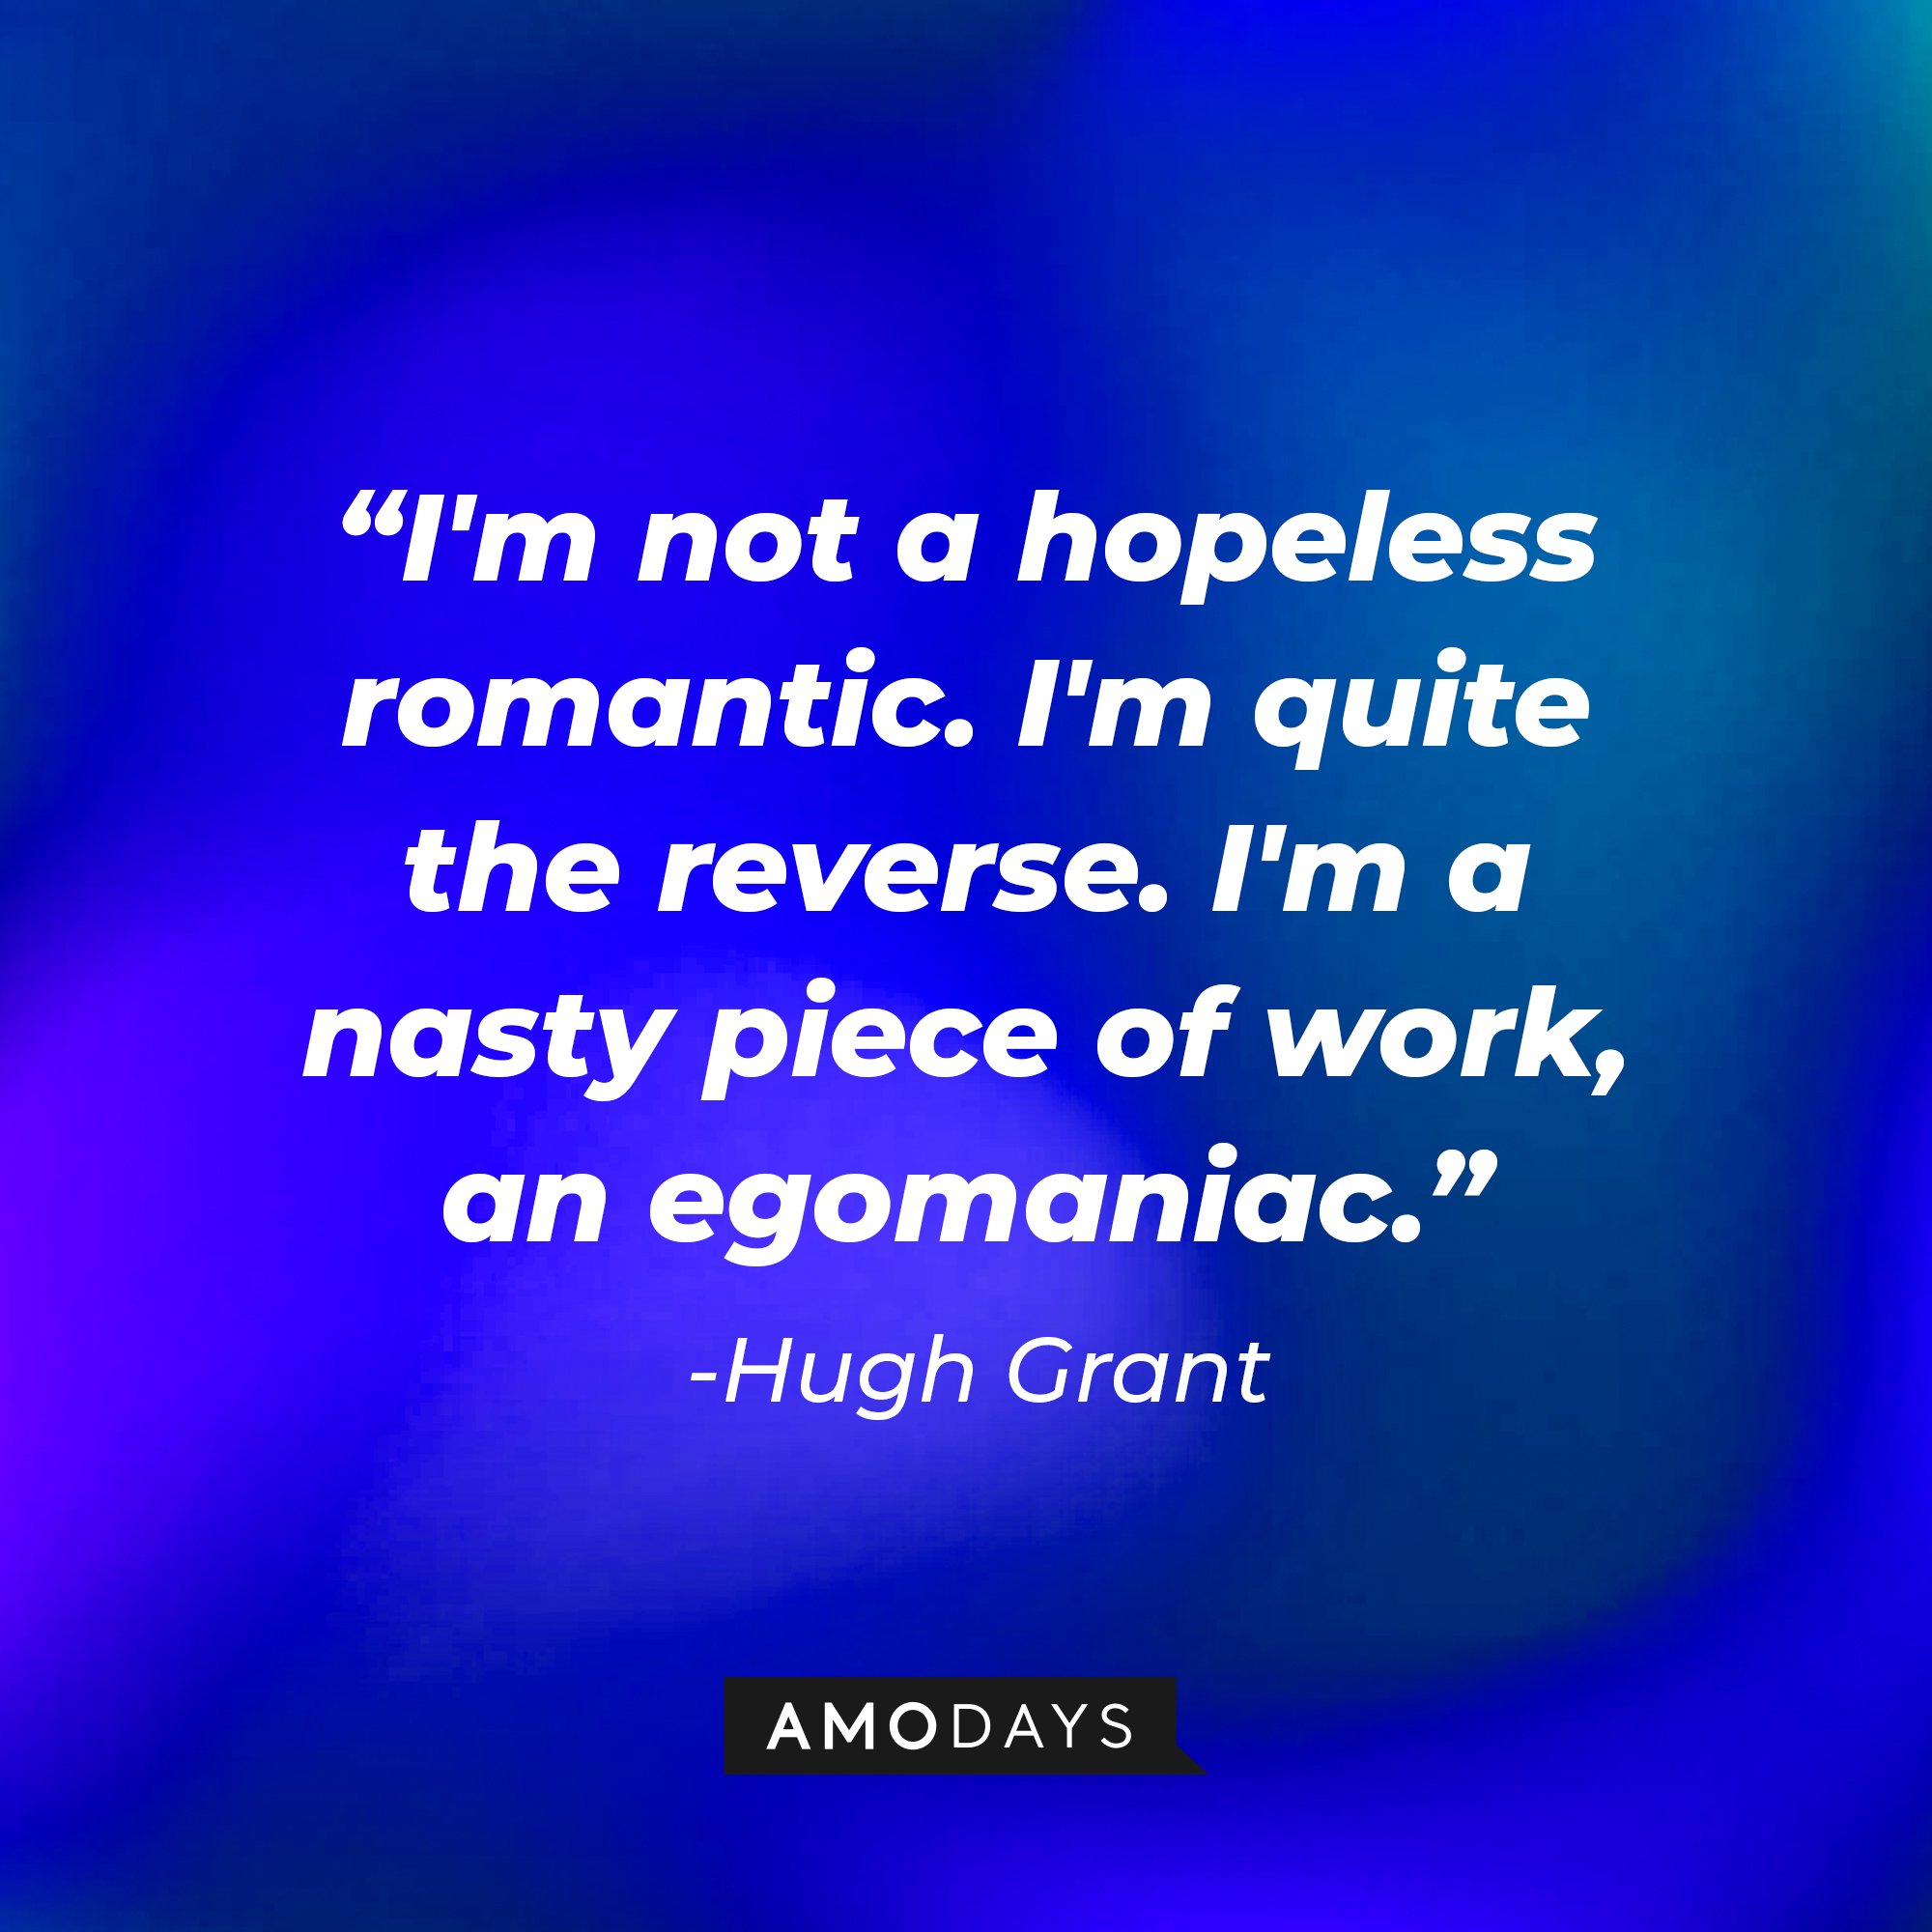 Hugh Grant’s quote: "I'm not a hopeless romantic. I'm quite the reverse. I'm a nasty piece of work, an egomaniac." | Image: AmoDays